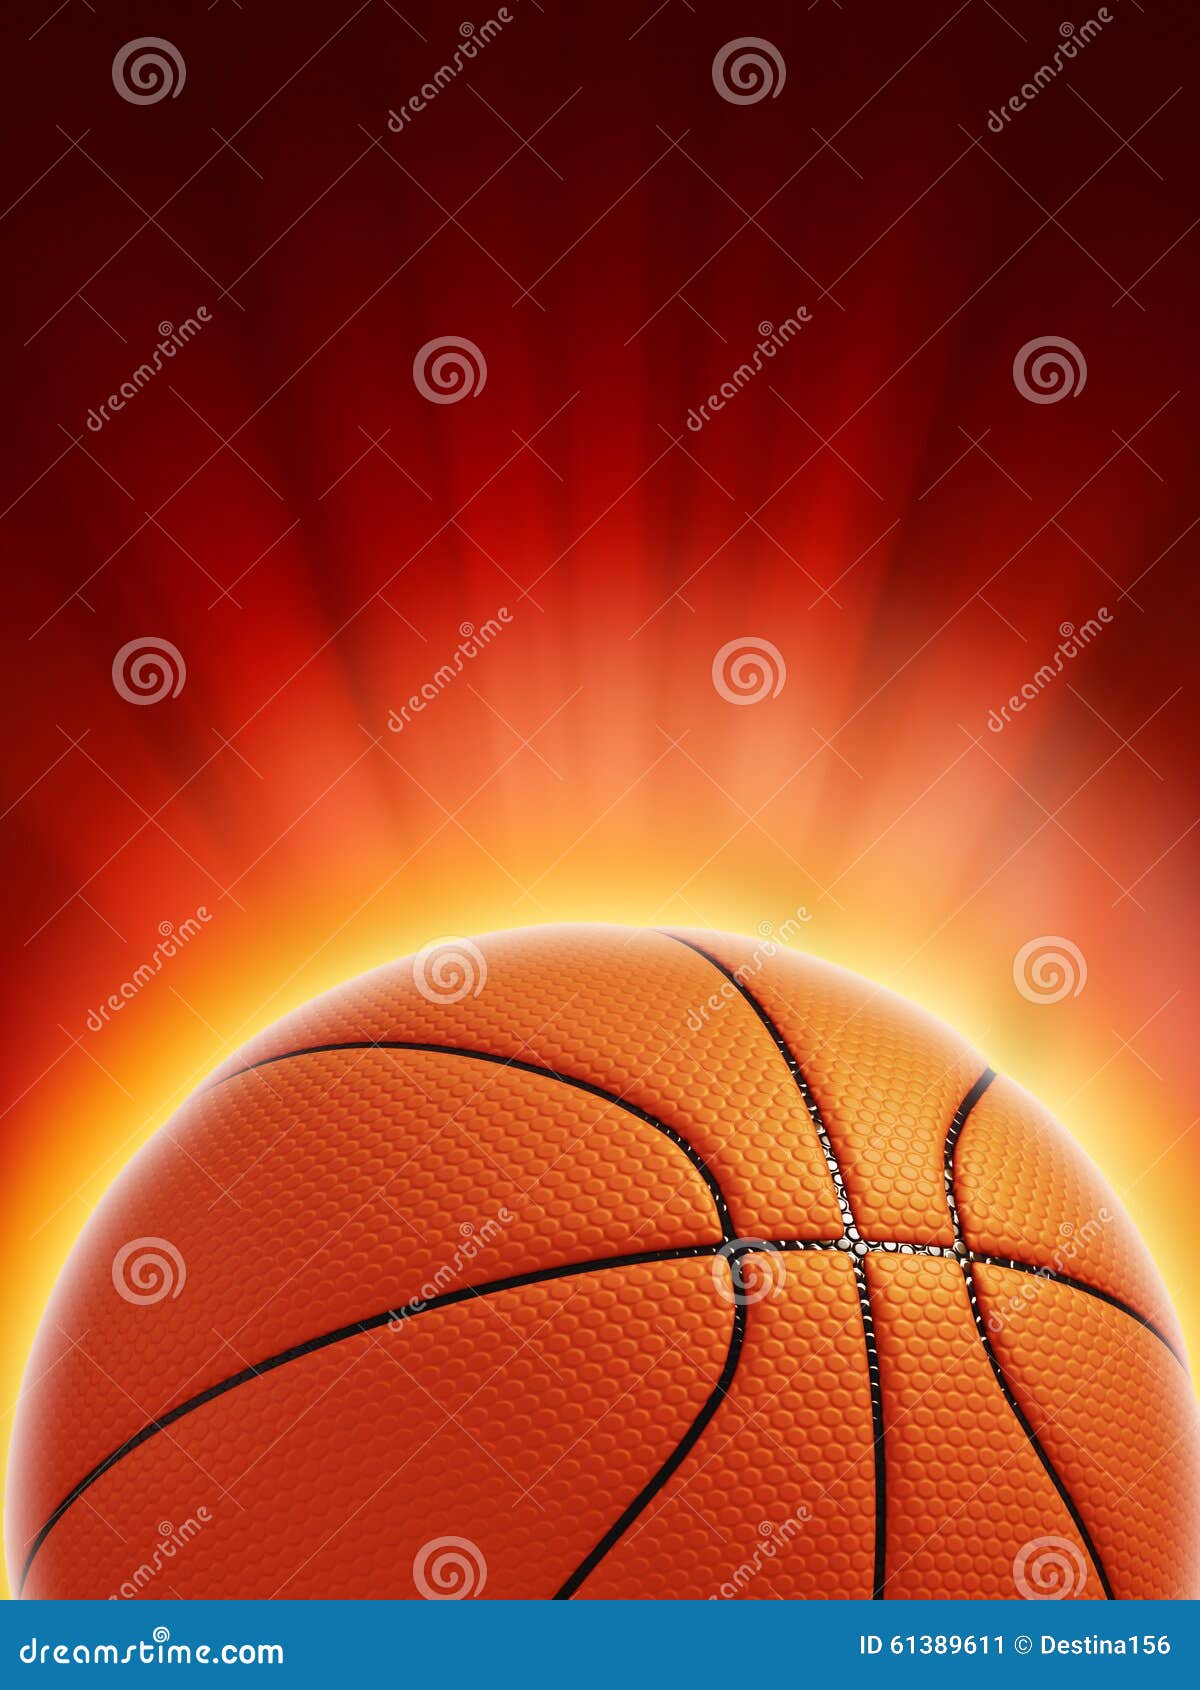 Basketball Wallpaper Photos Download The BEST Free Basketball Wallpaper  Stock Photos  HD Images